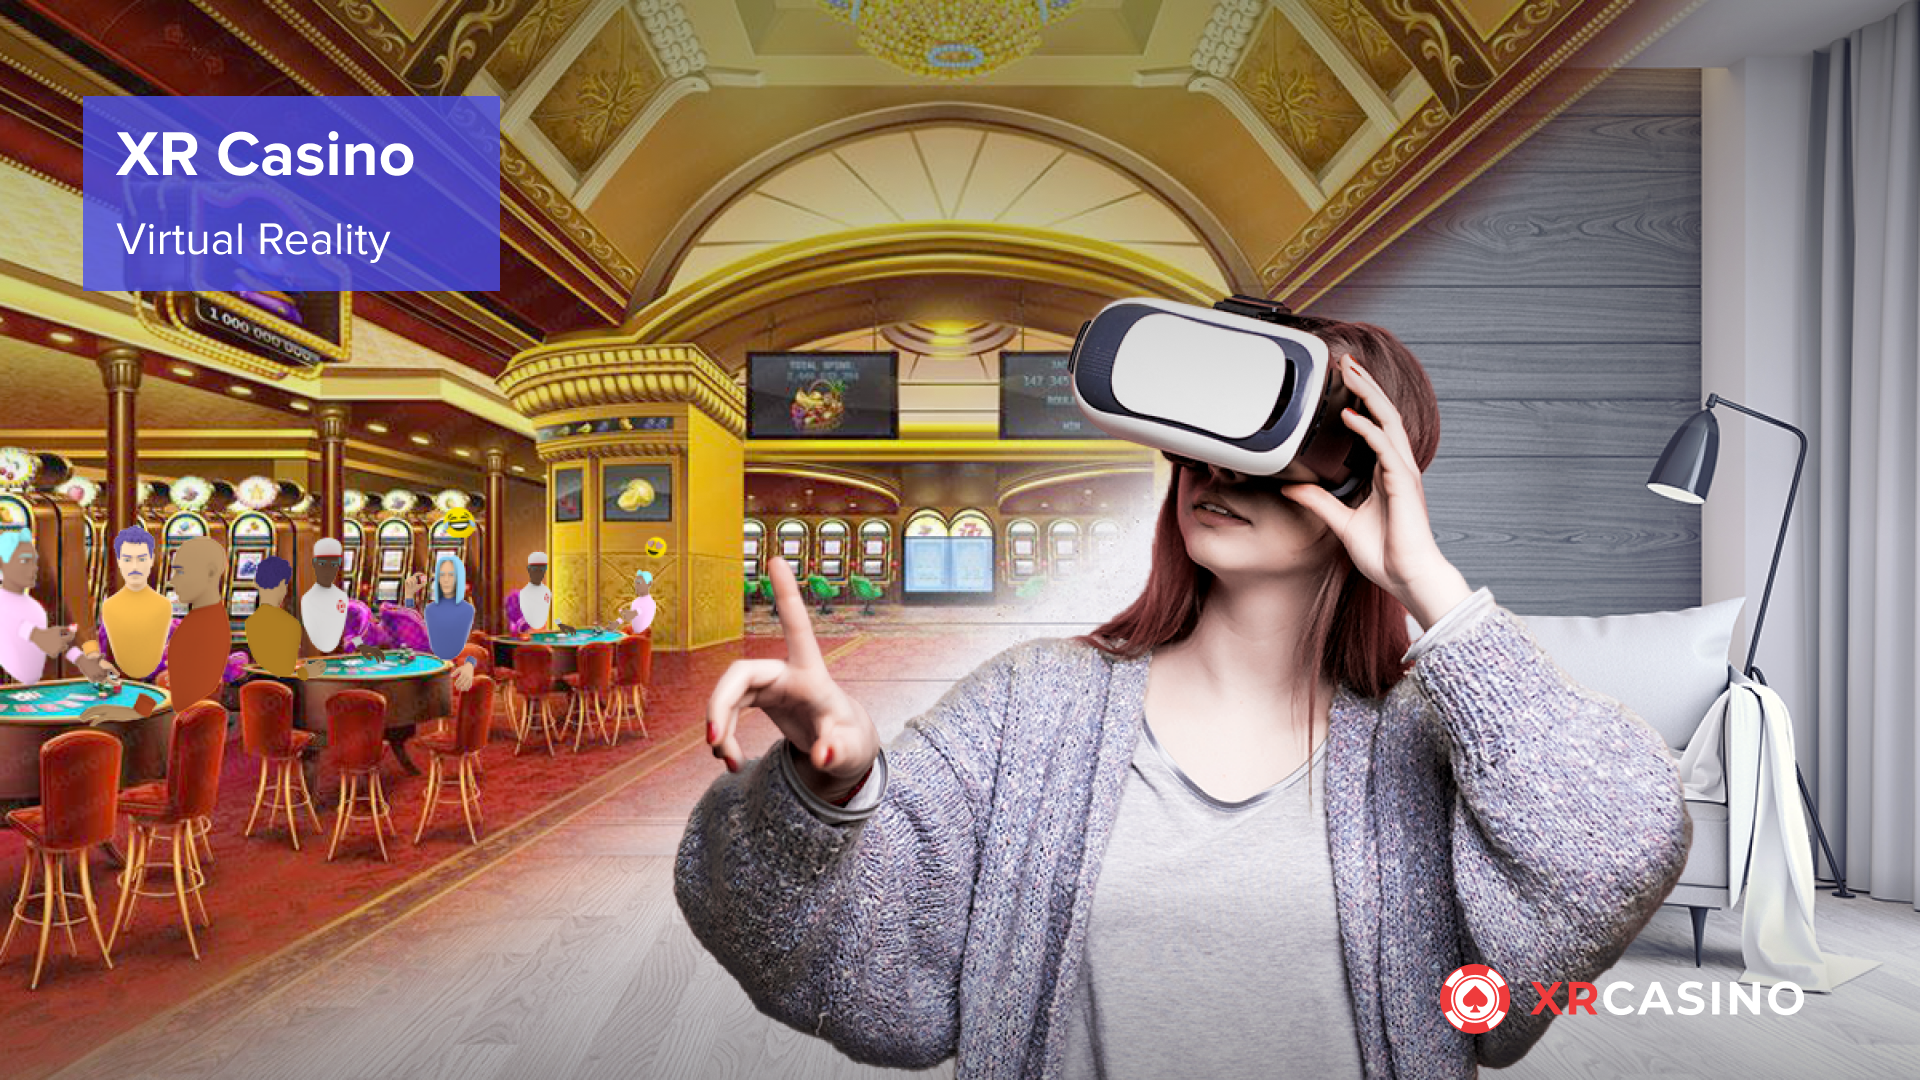 XR Casino - Virtual Reality